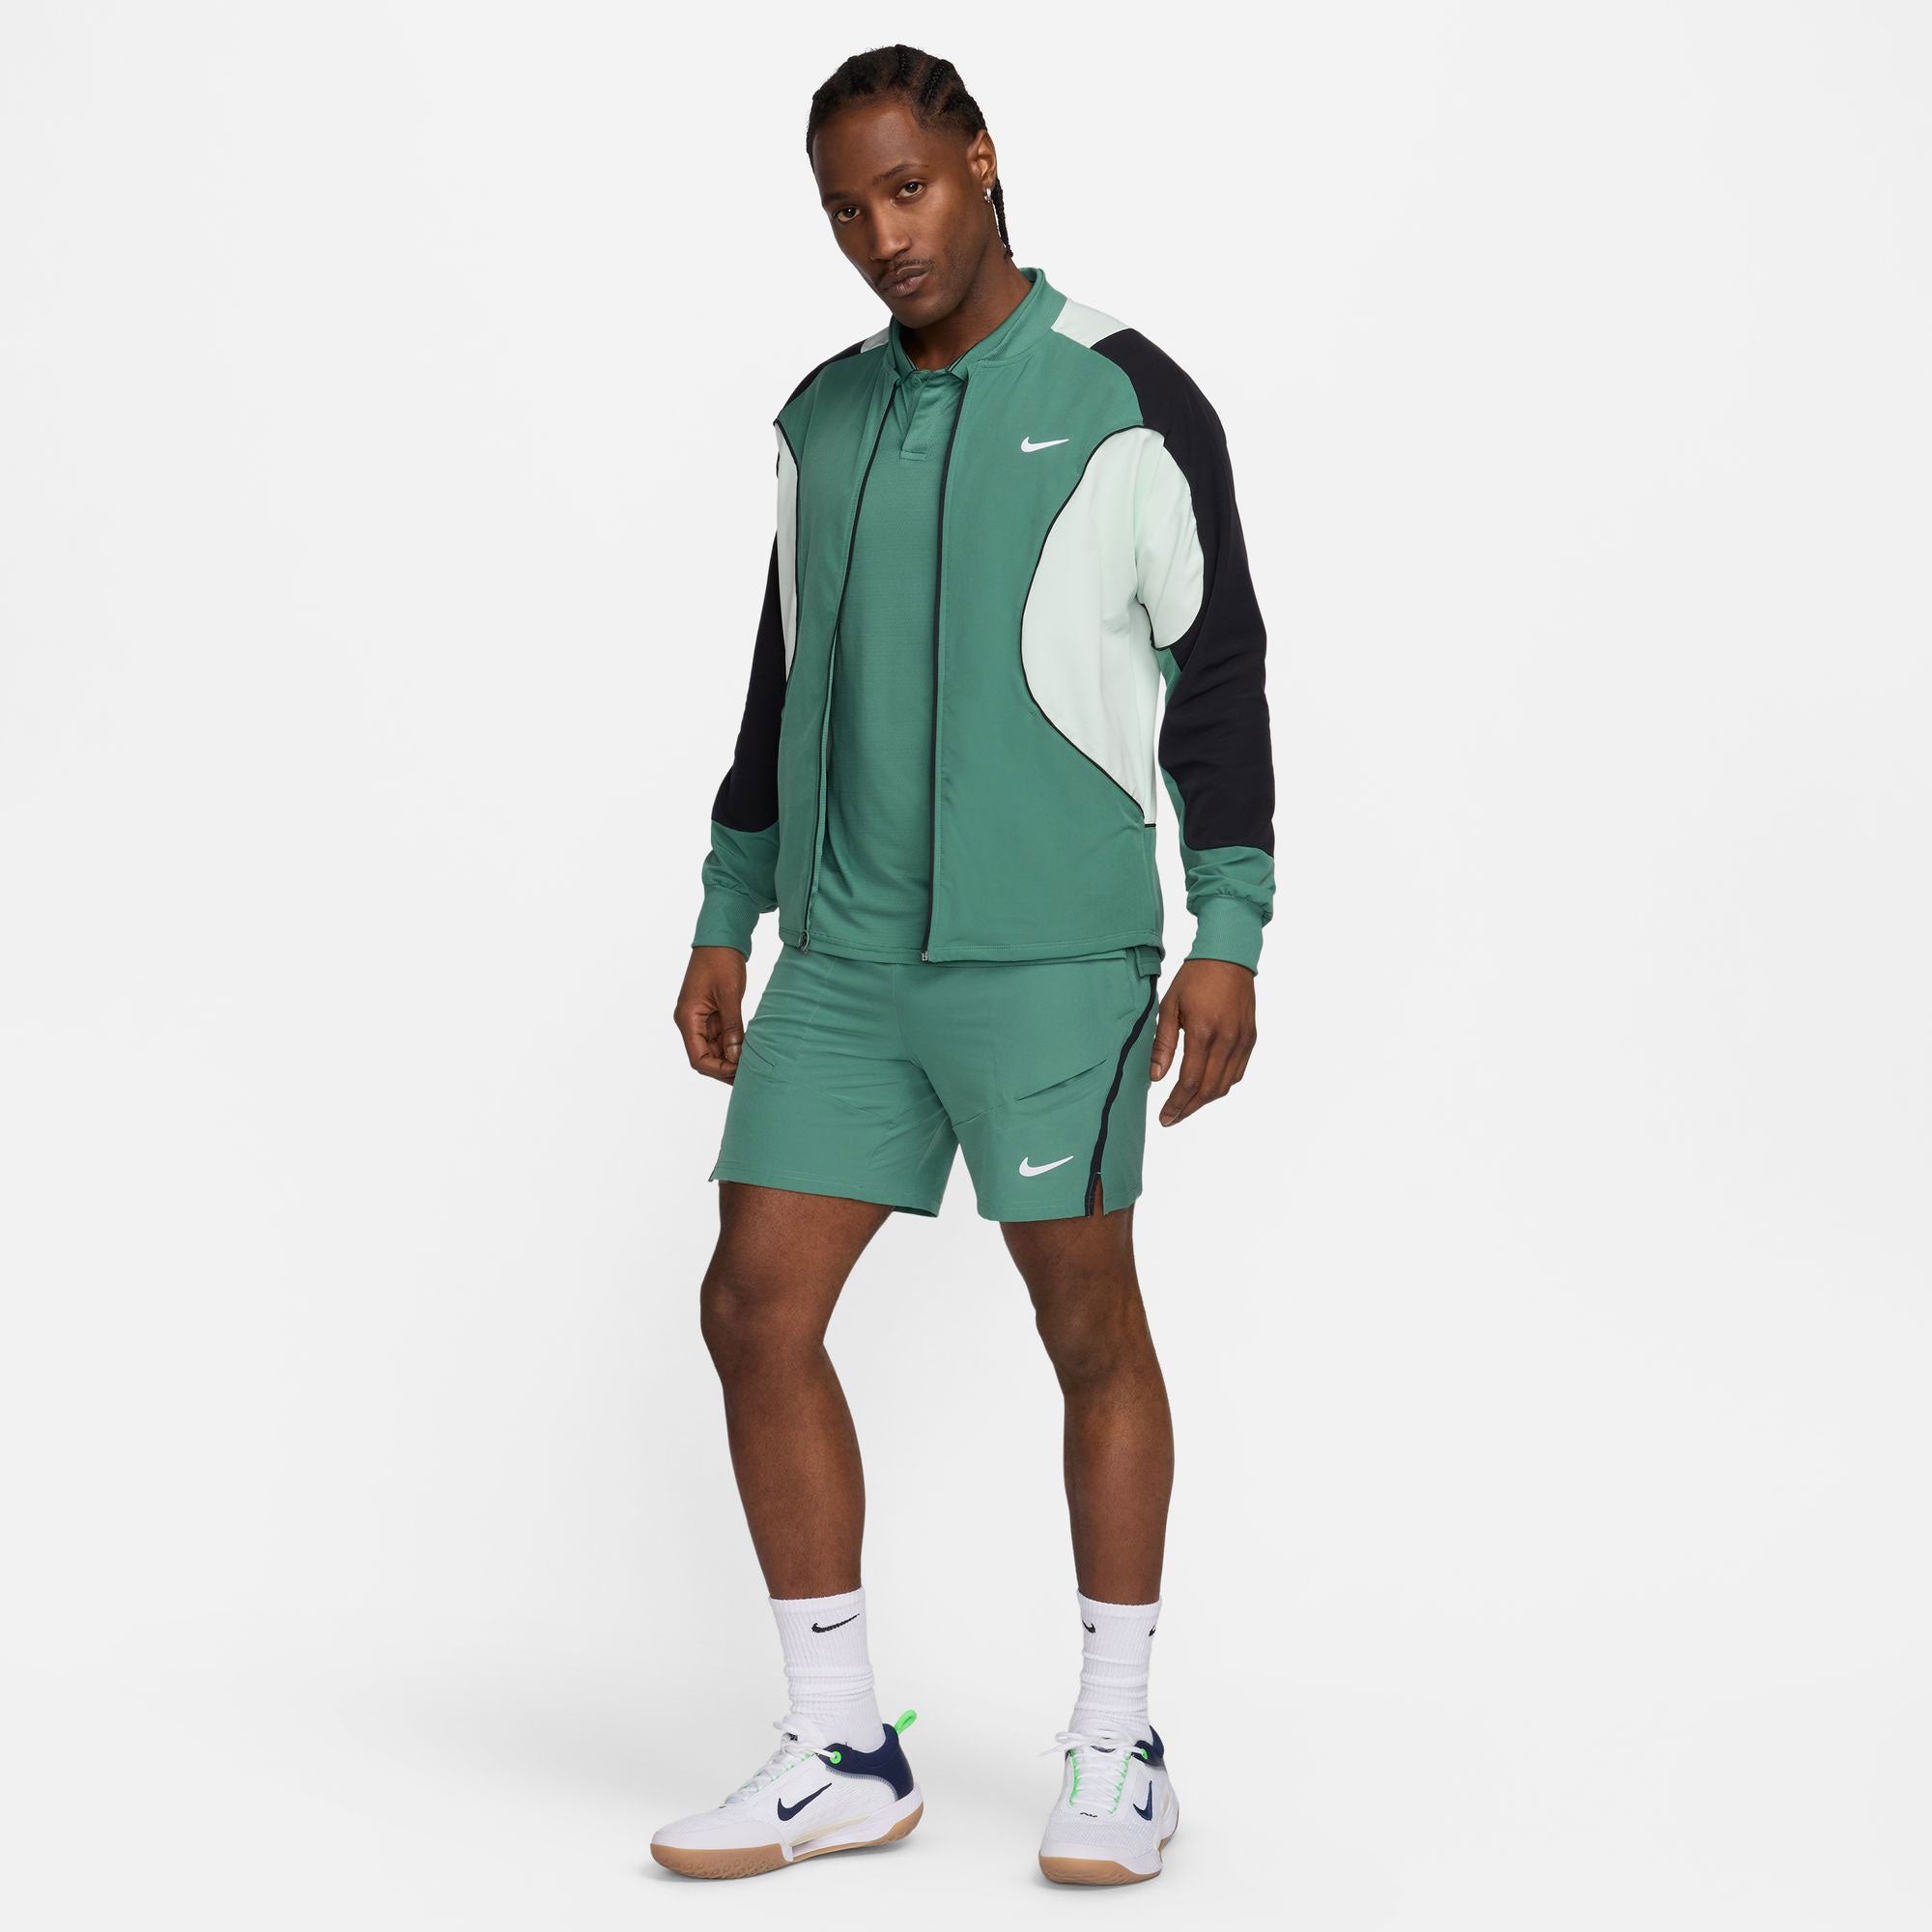 NikeCourt Advantage Men's Dri-FIT Tennis Jacket - Green (6)